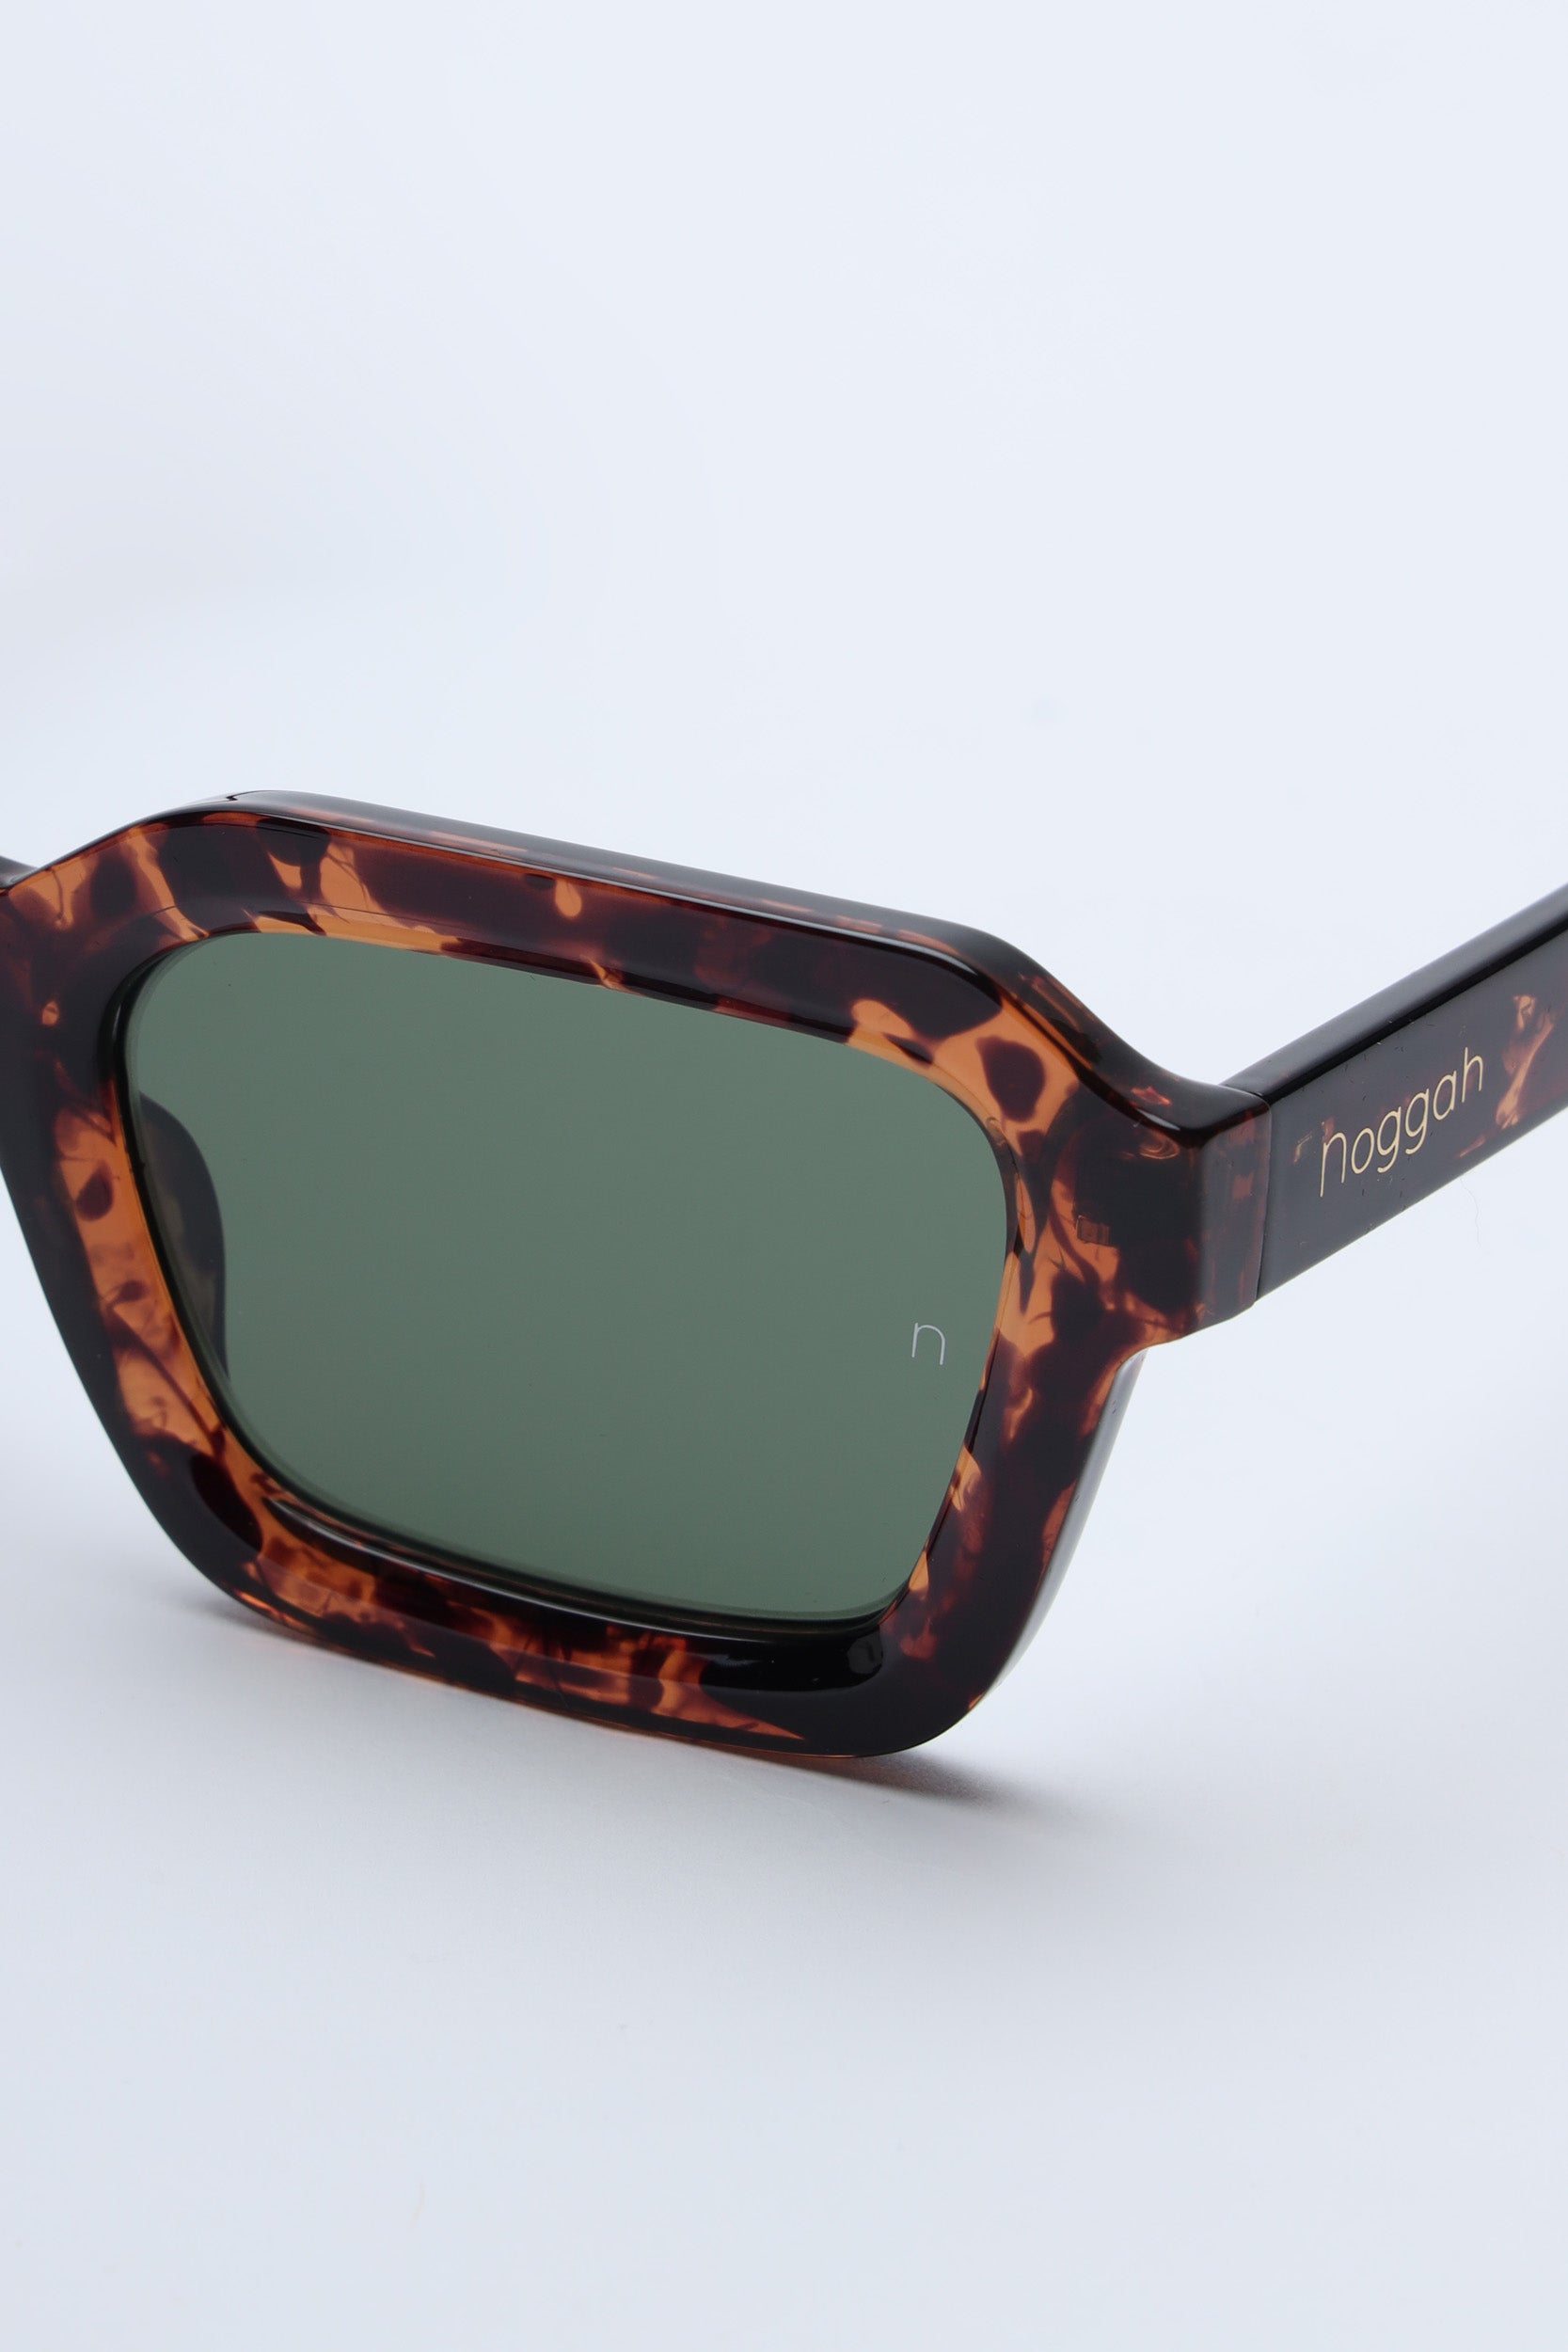 NS1007TFGL PC Tortoise Frame with Green Glass Lens Sunglasses